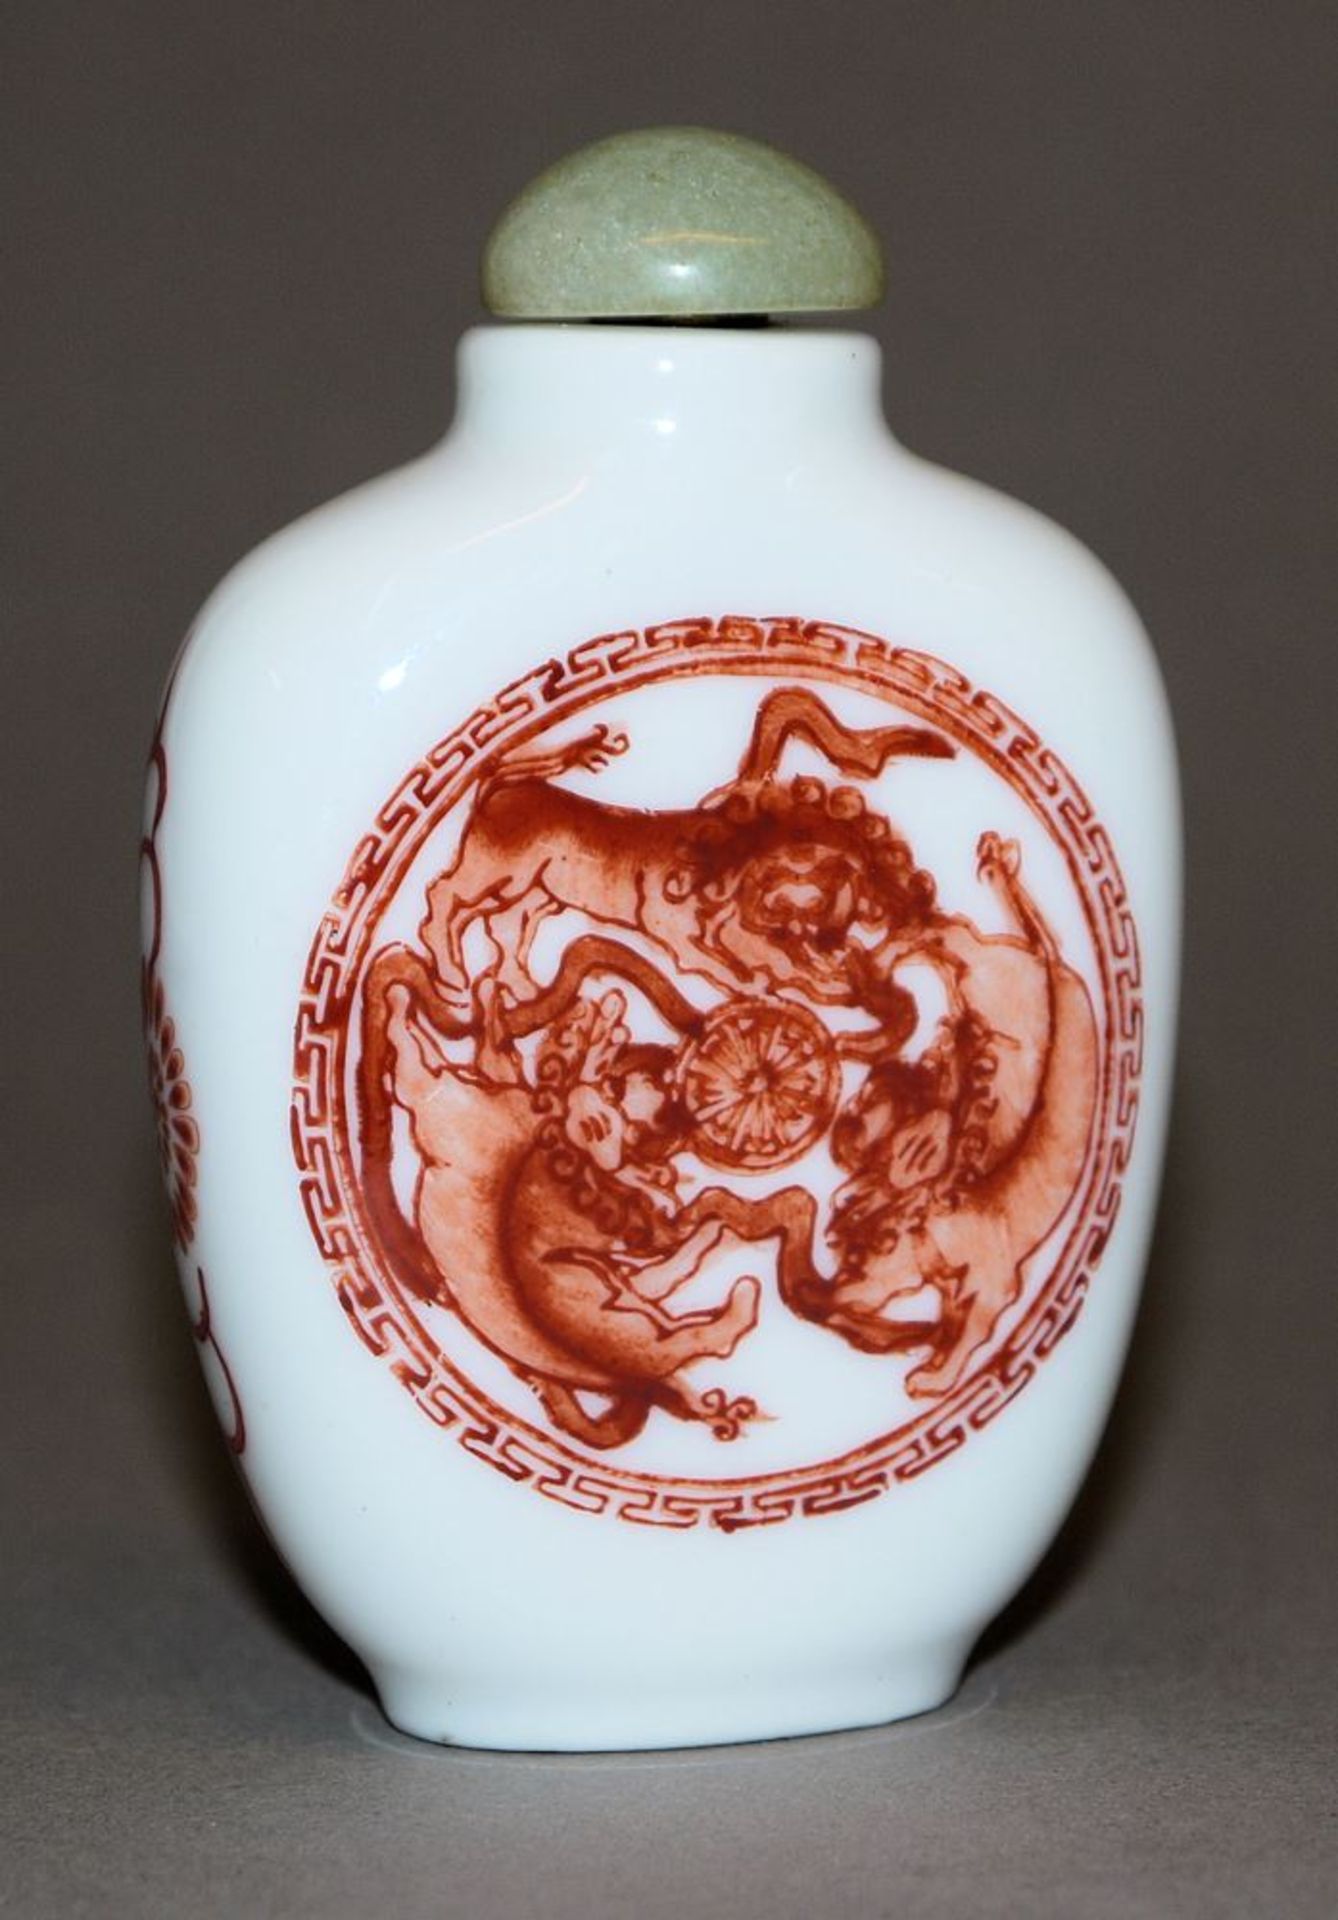 Porzellan-Snuffbottle mit eisenroten Löwen-Tondi, China 20. Jh. - Bild 2 aus 2